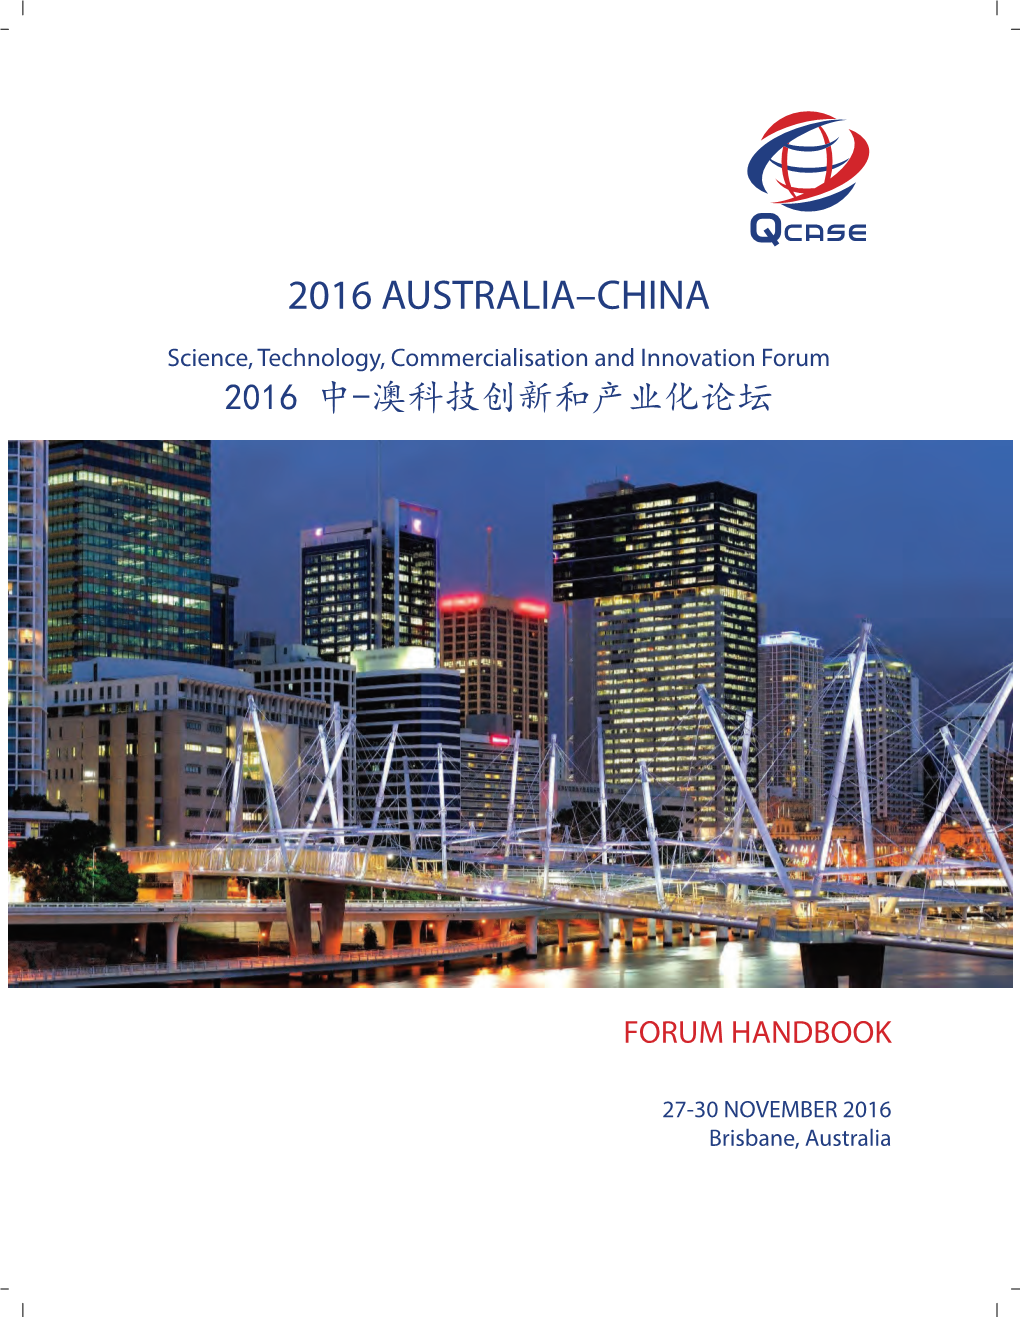 2016 AUSTRALIA-CHINA Science, Technology